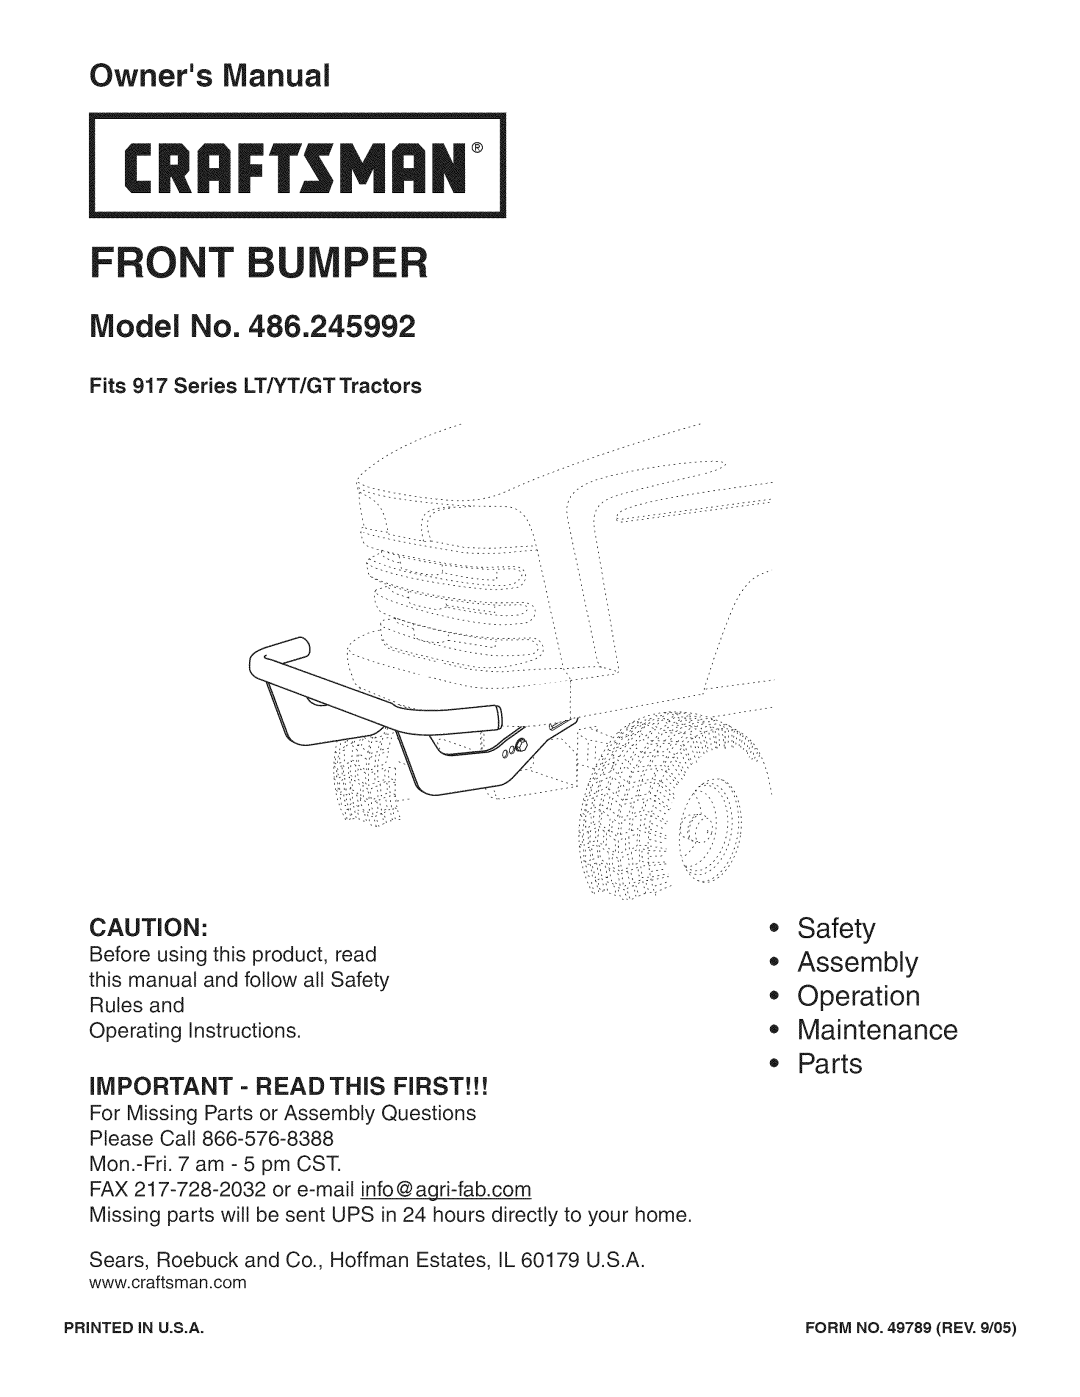 Craftsman 486.245992 manual Safety Assembly Operation Maintenance Parts, F Nt U Ie, Model No 